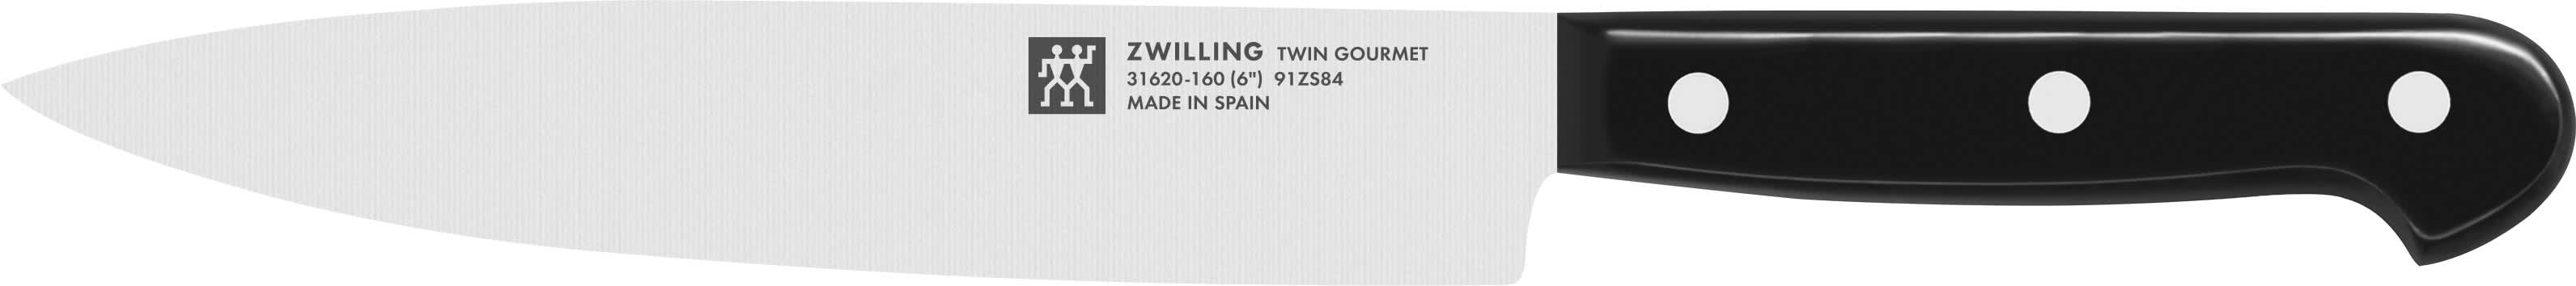 ZWILLING® Twin Gourmet 18 Piece Knife Block Set